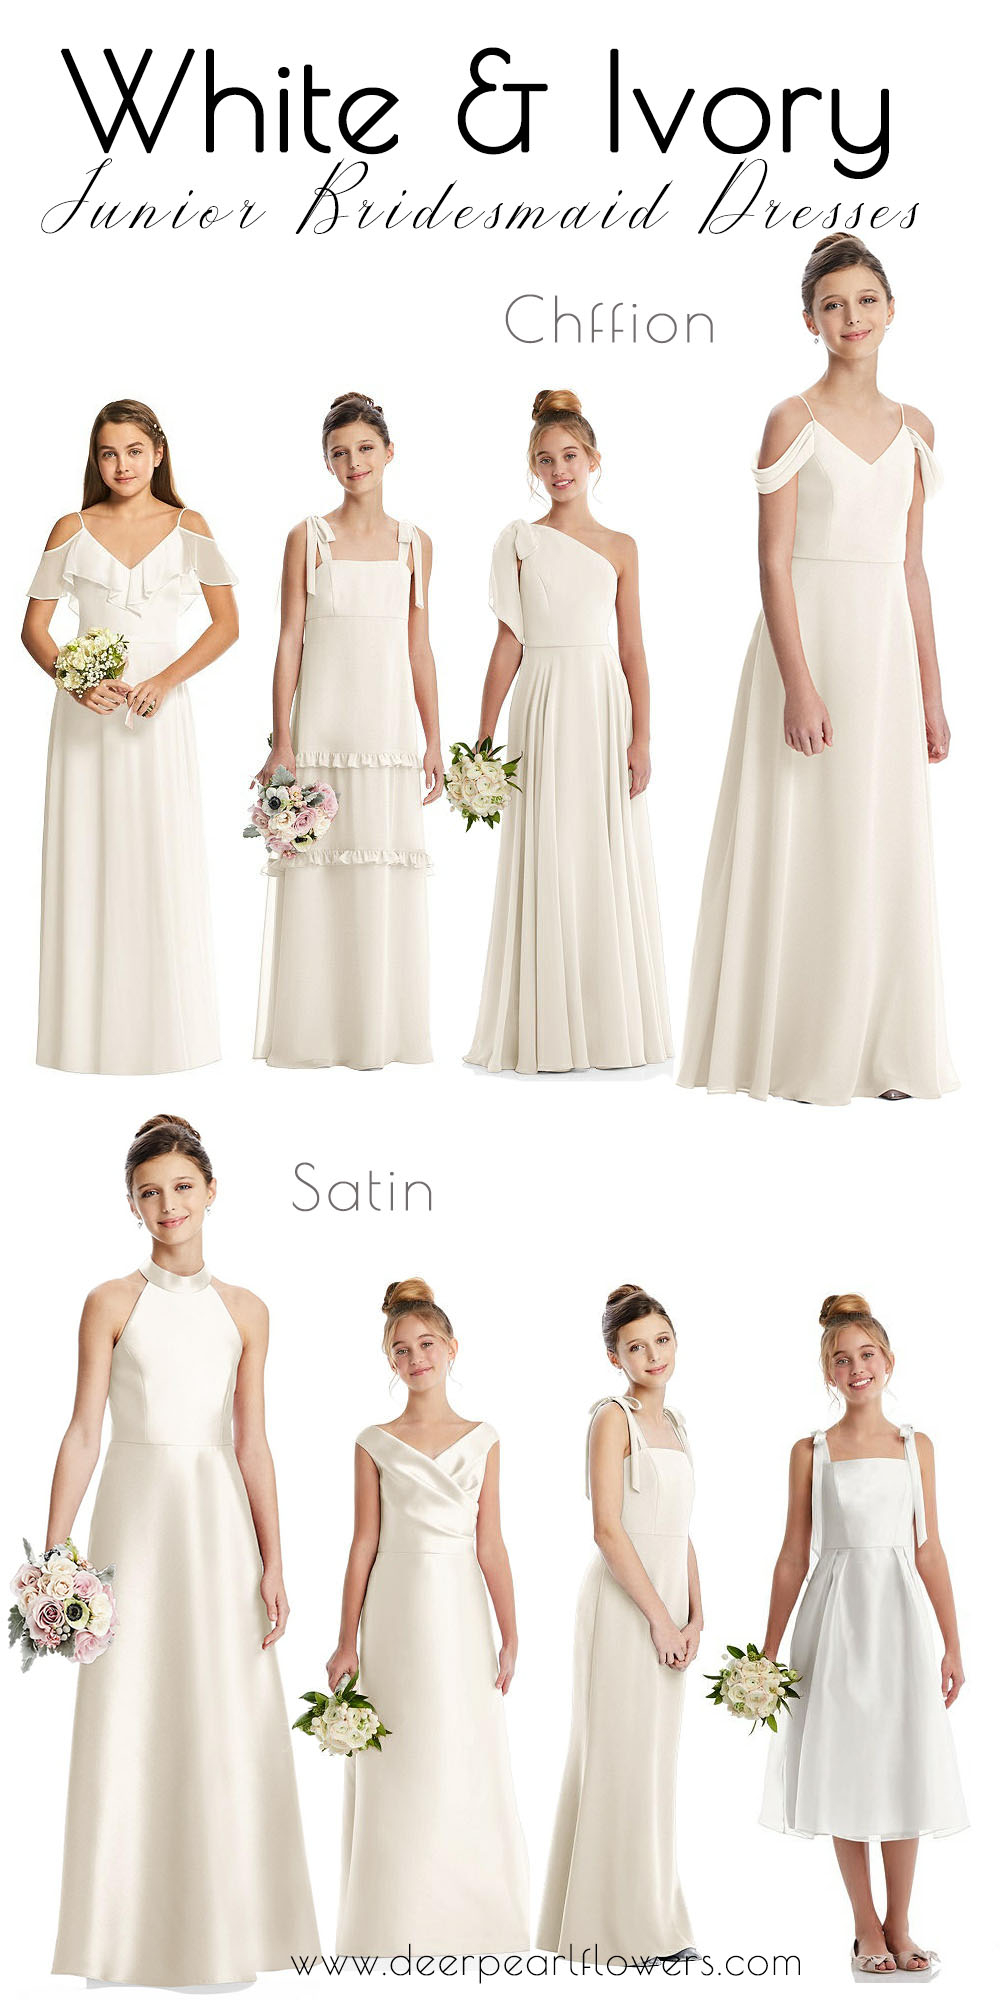 white ivory junior bridesmaid dress